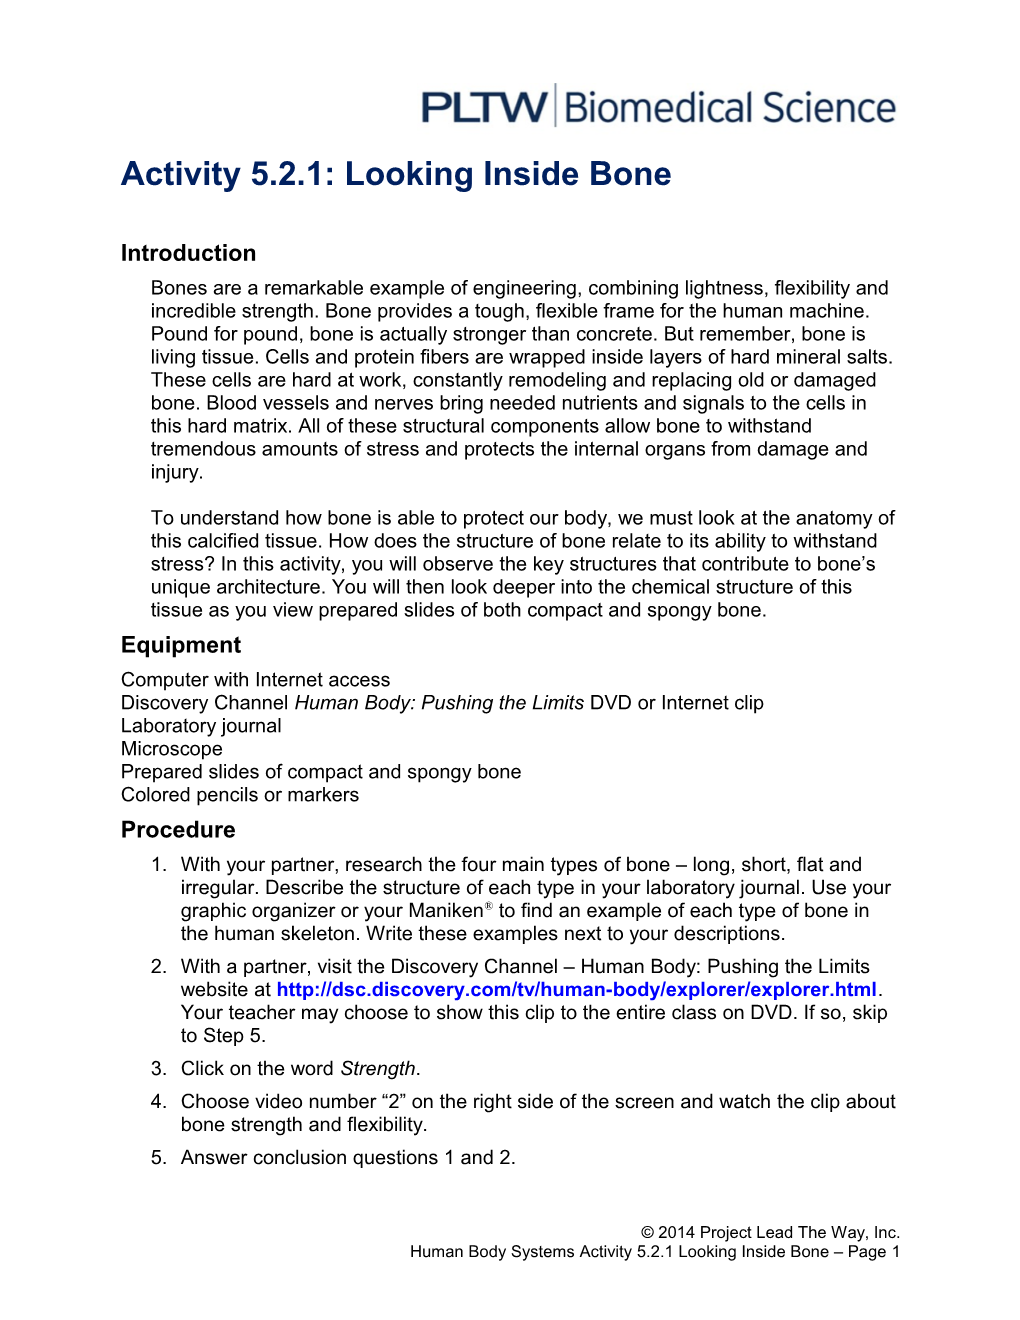 Activity 5.2.1: Looking Inside Bone